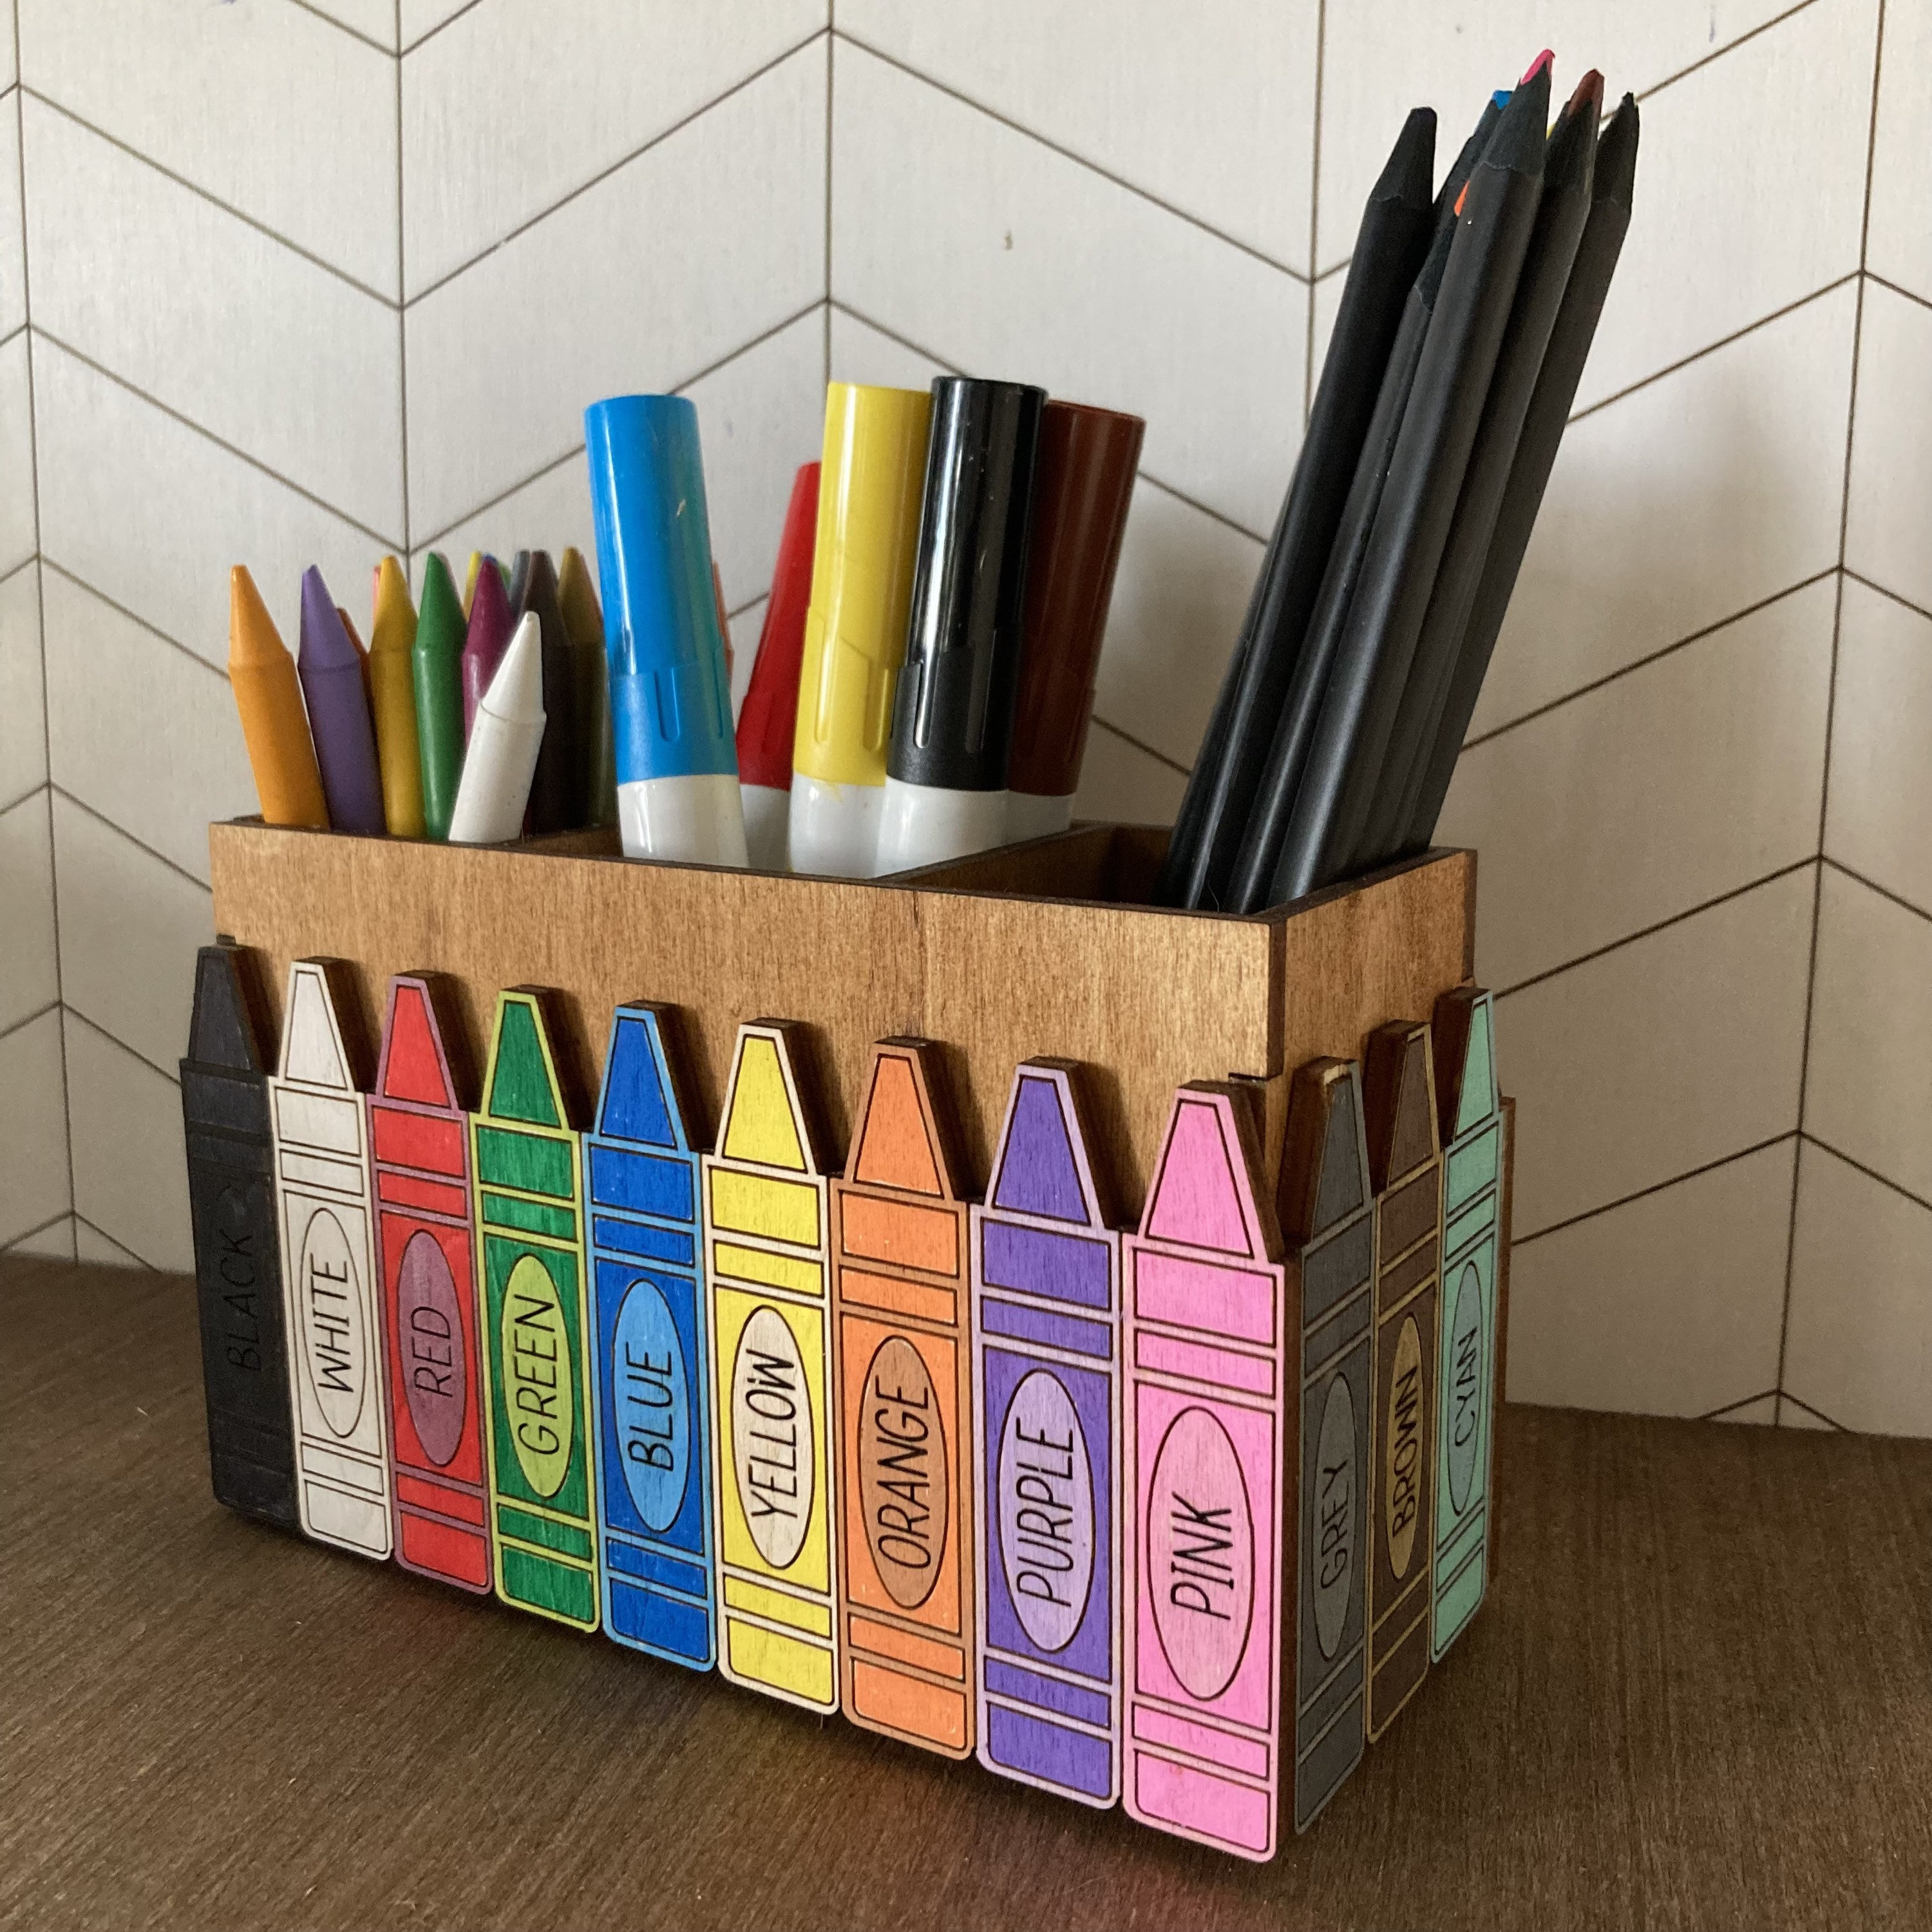 Crayon Pens/colored Ink 